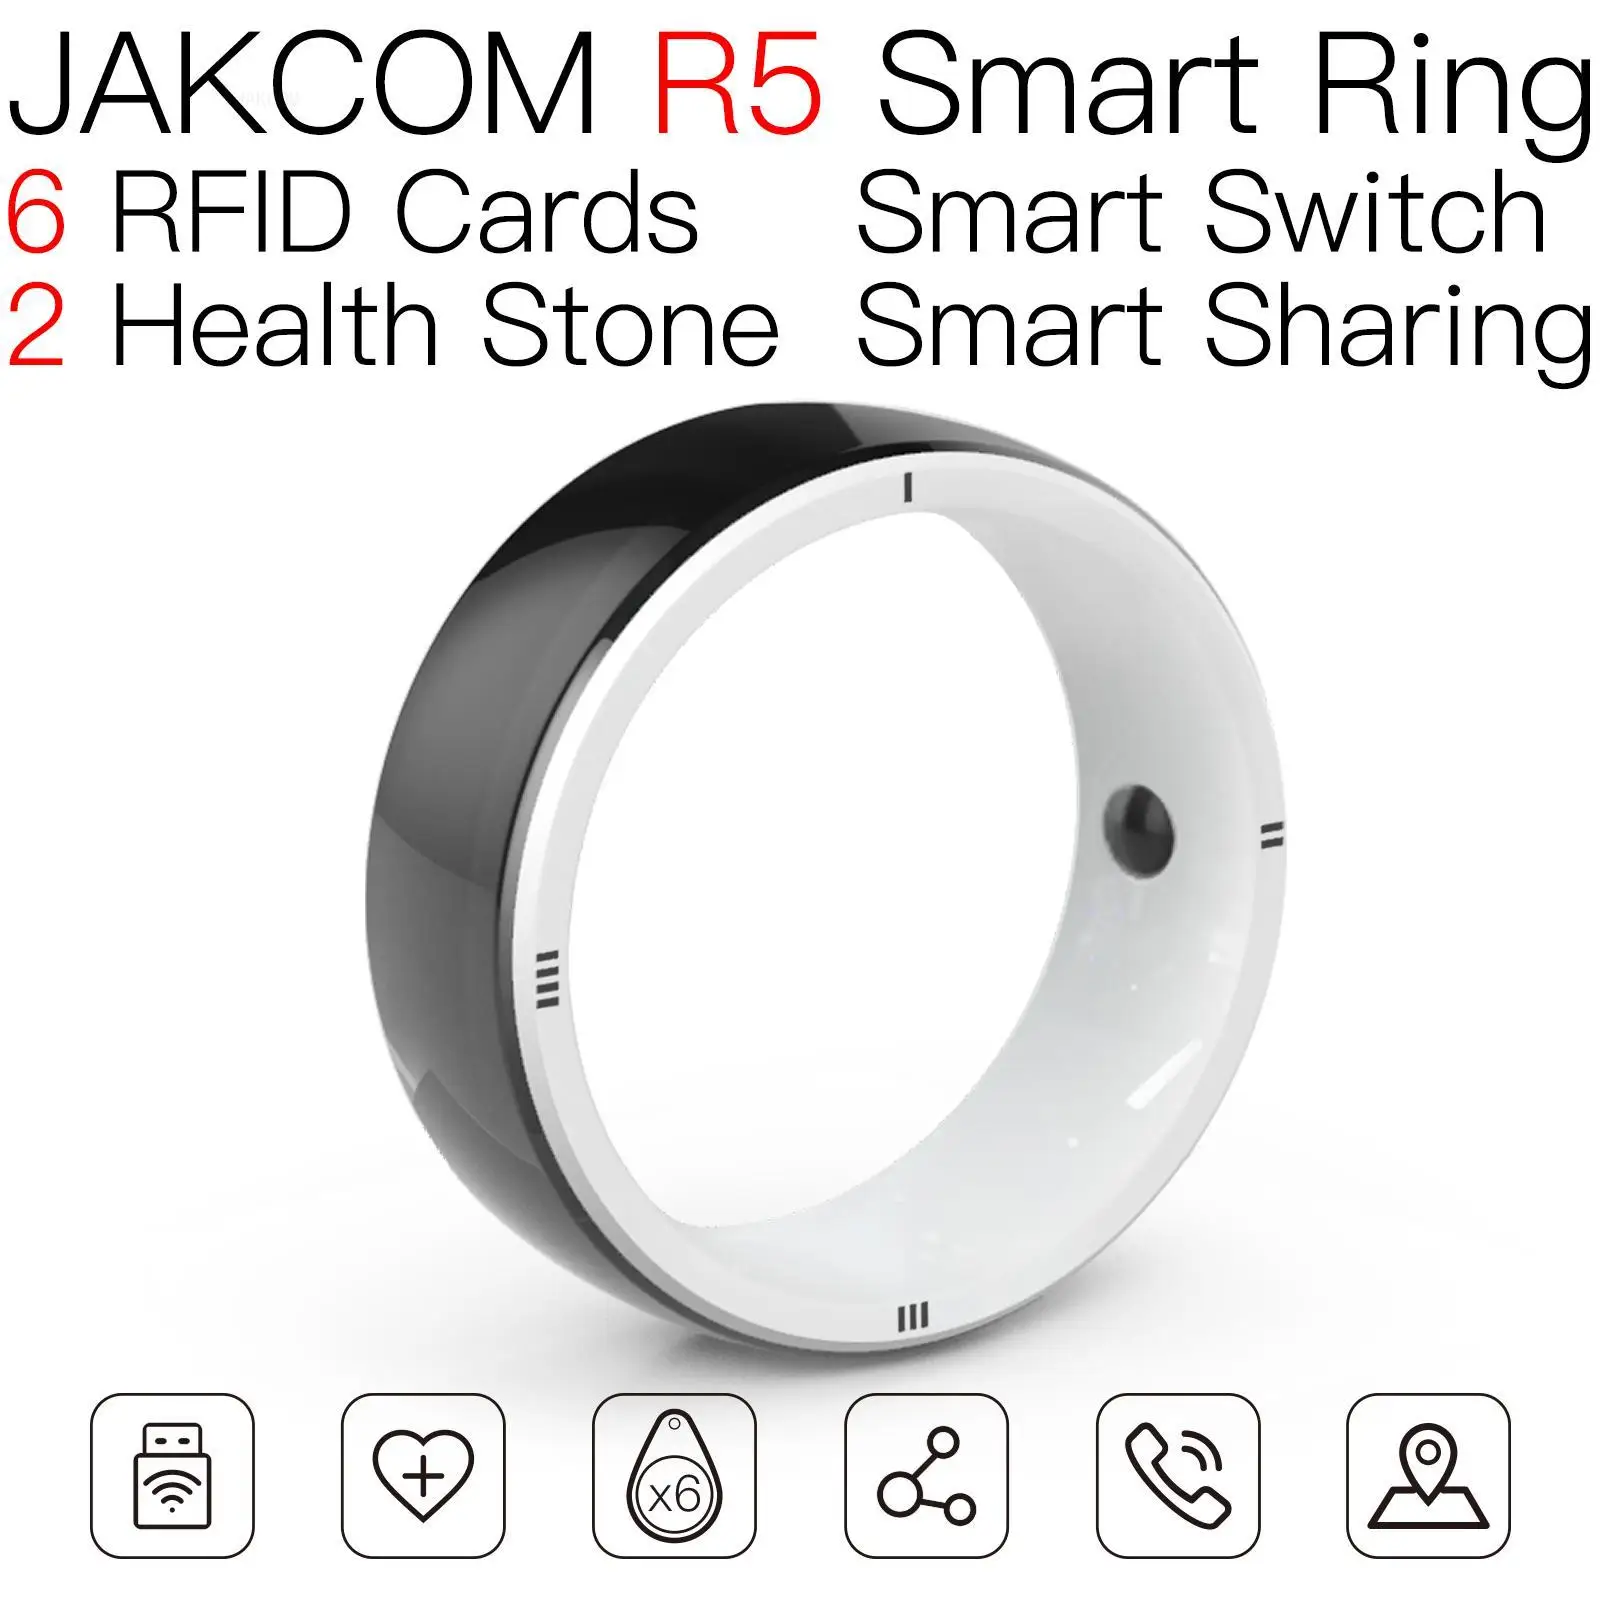 

JAKCOM R5 Smart Ring Newer than carte nfc new horizon alpha2omega stephen tucker user bonus deal with free shipping coin card